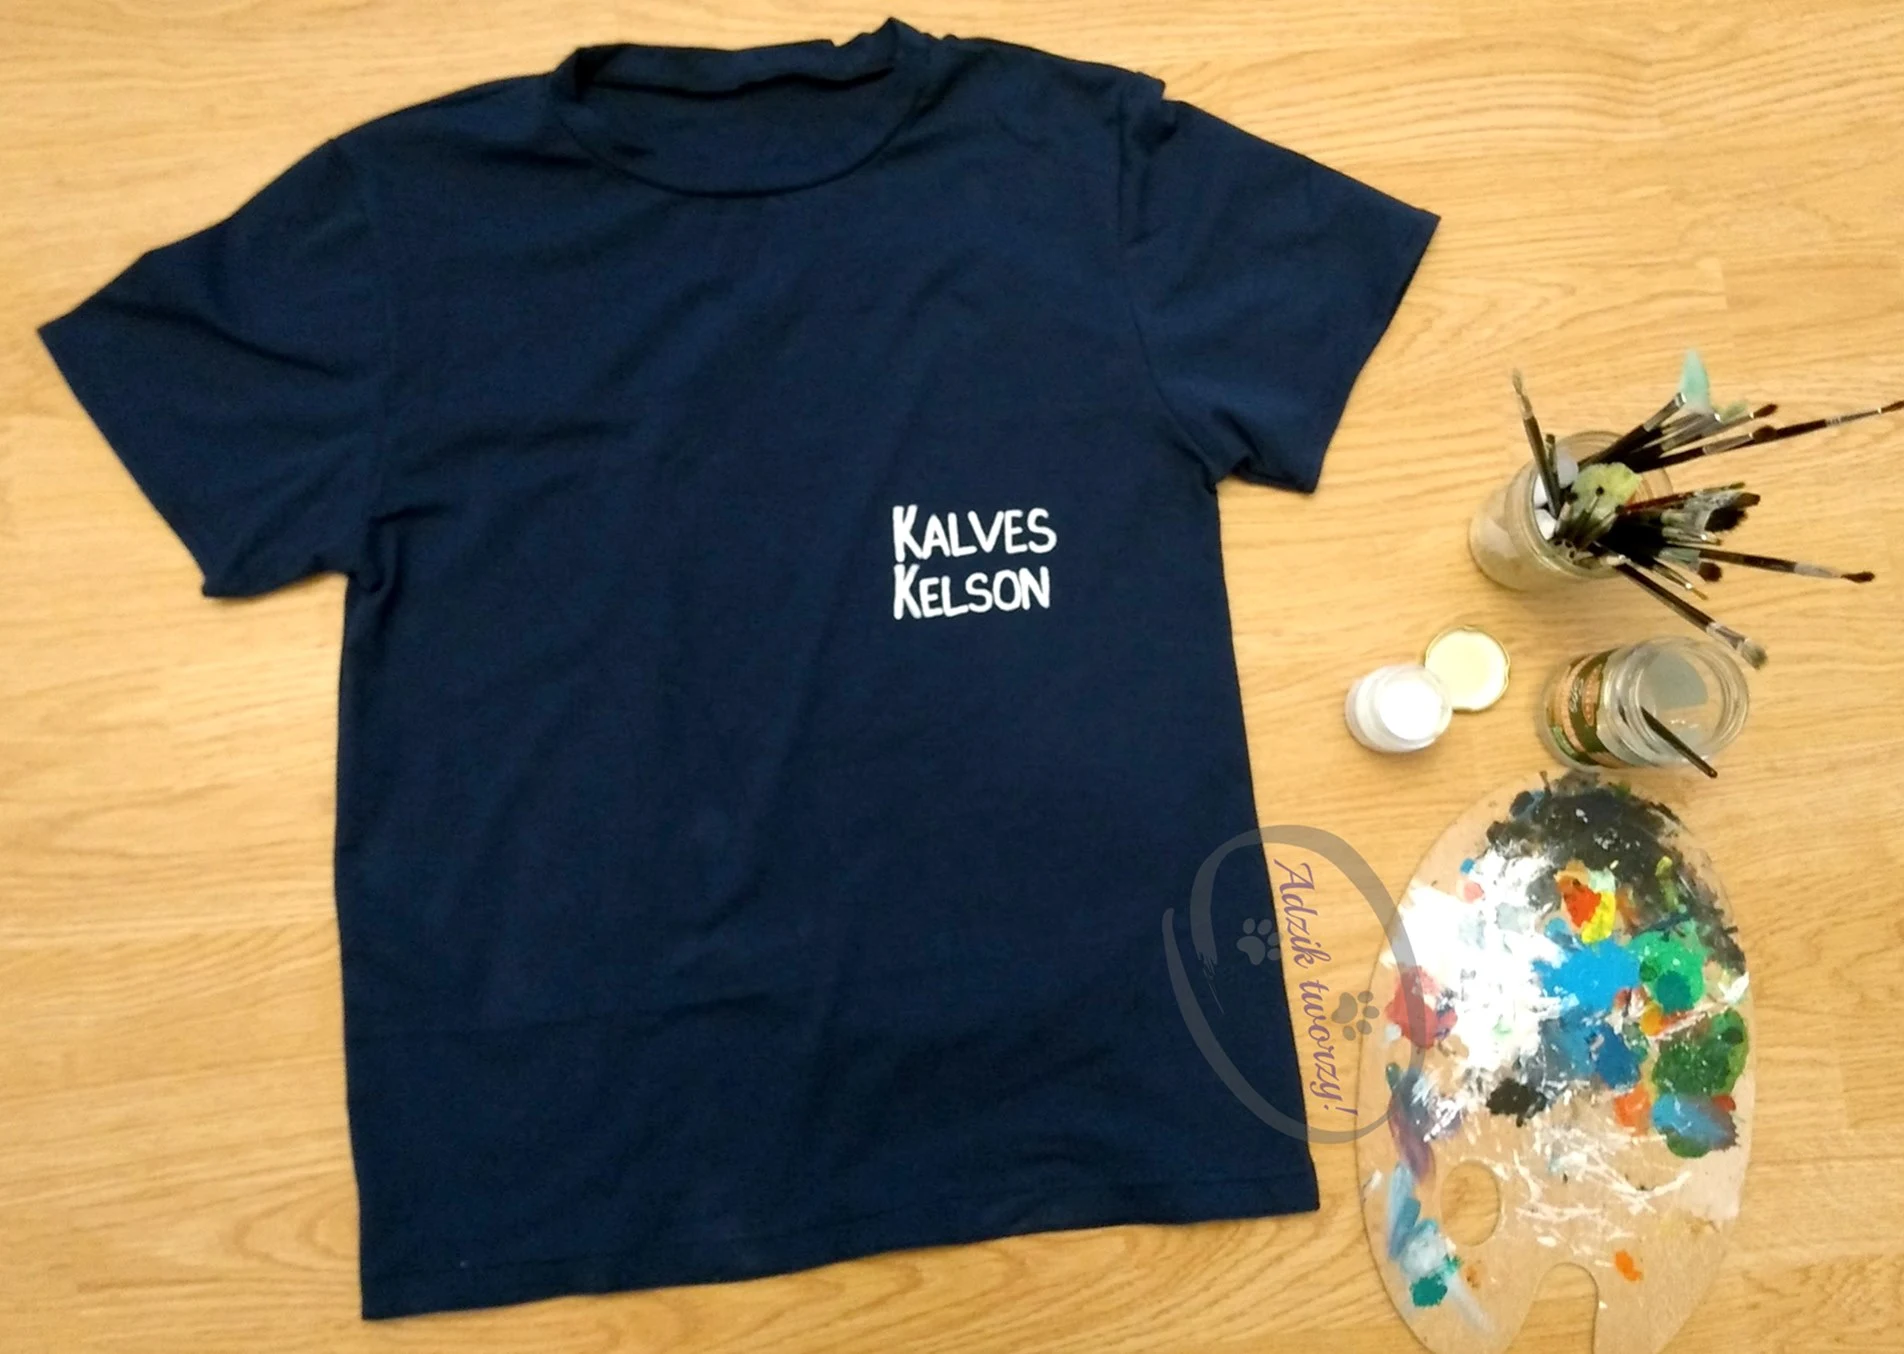 Jak uszyłam chłopakowi t-shirt DIY (t-shirt Kalves Kelson) - Adzik tworzy